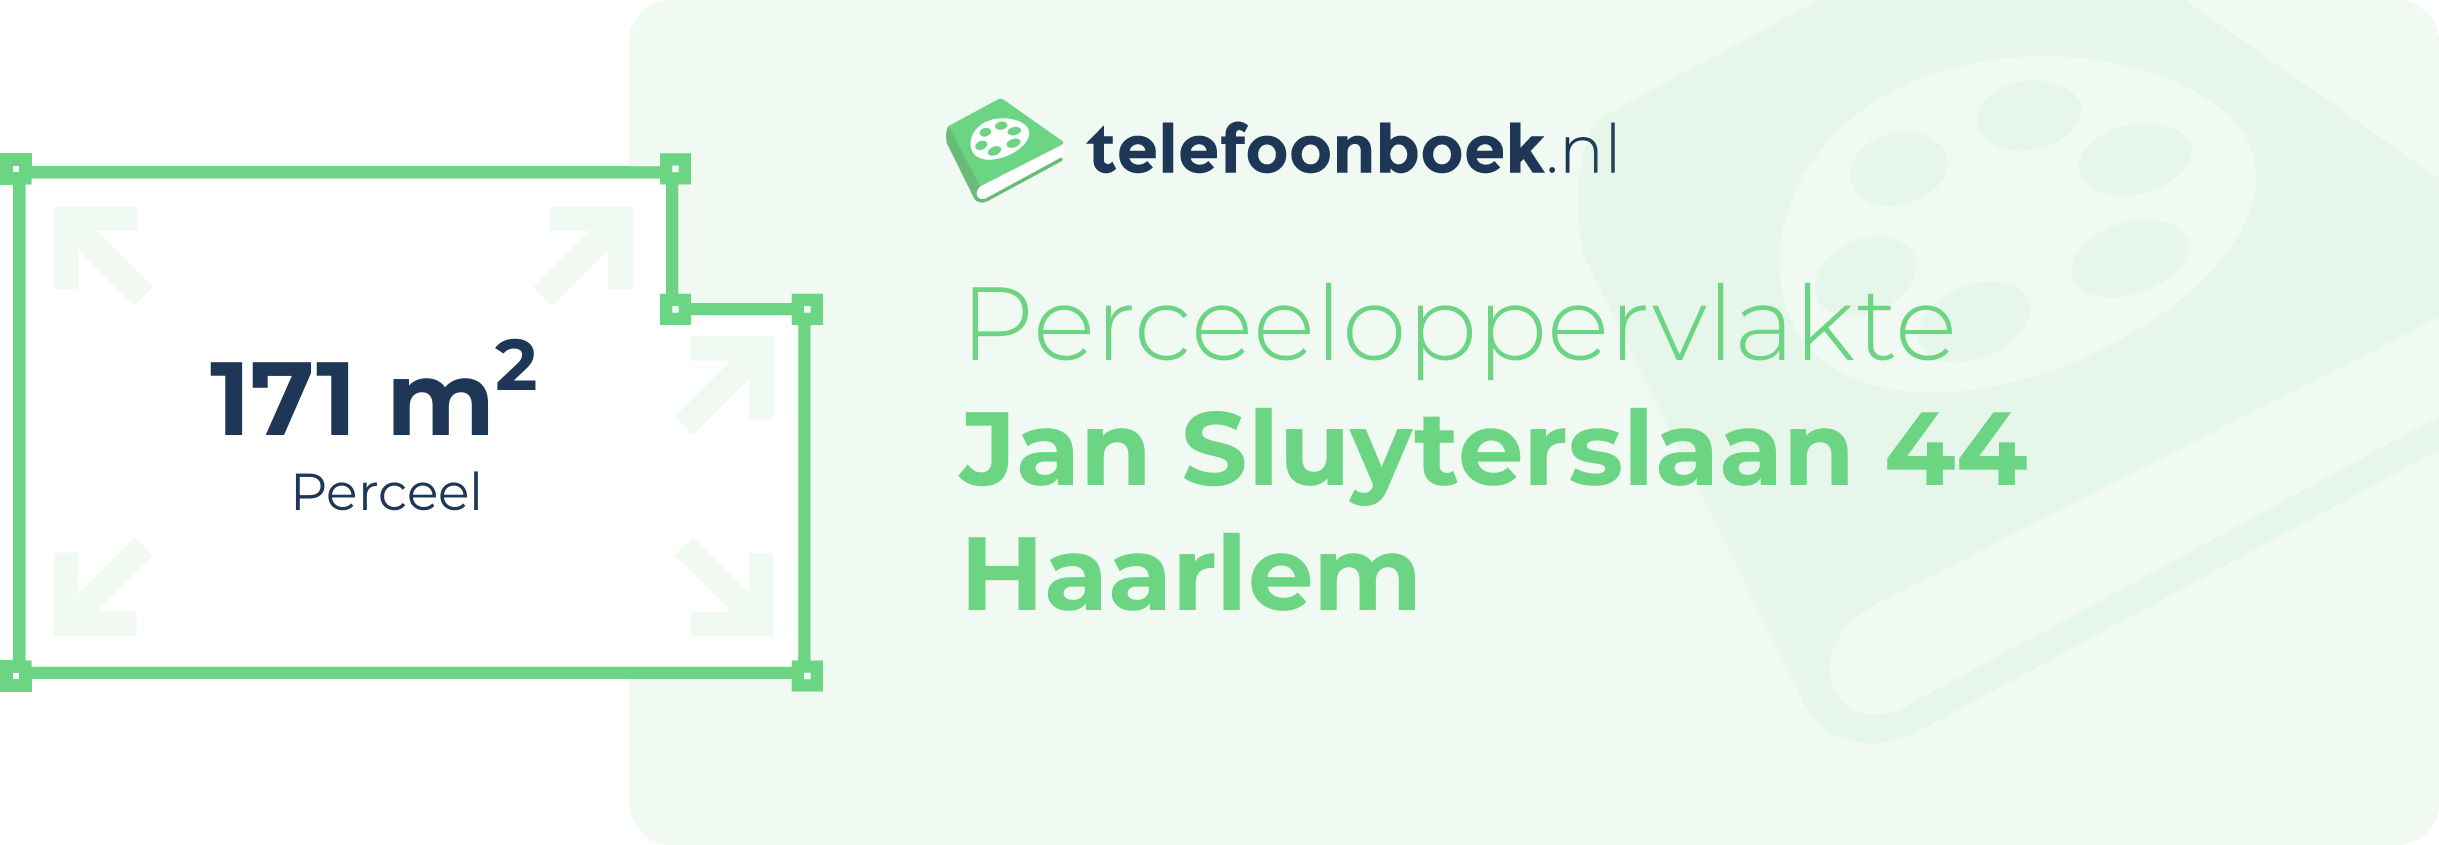 Perceeloppervlakte Jan Sluyterslaan 44 Haarlem